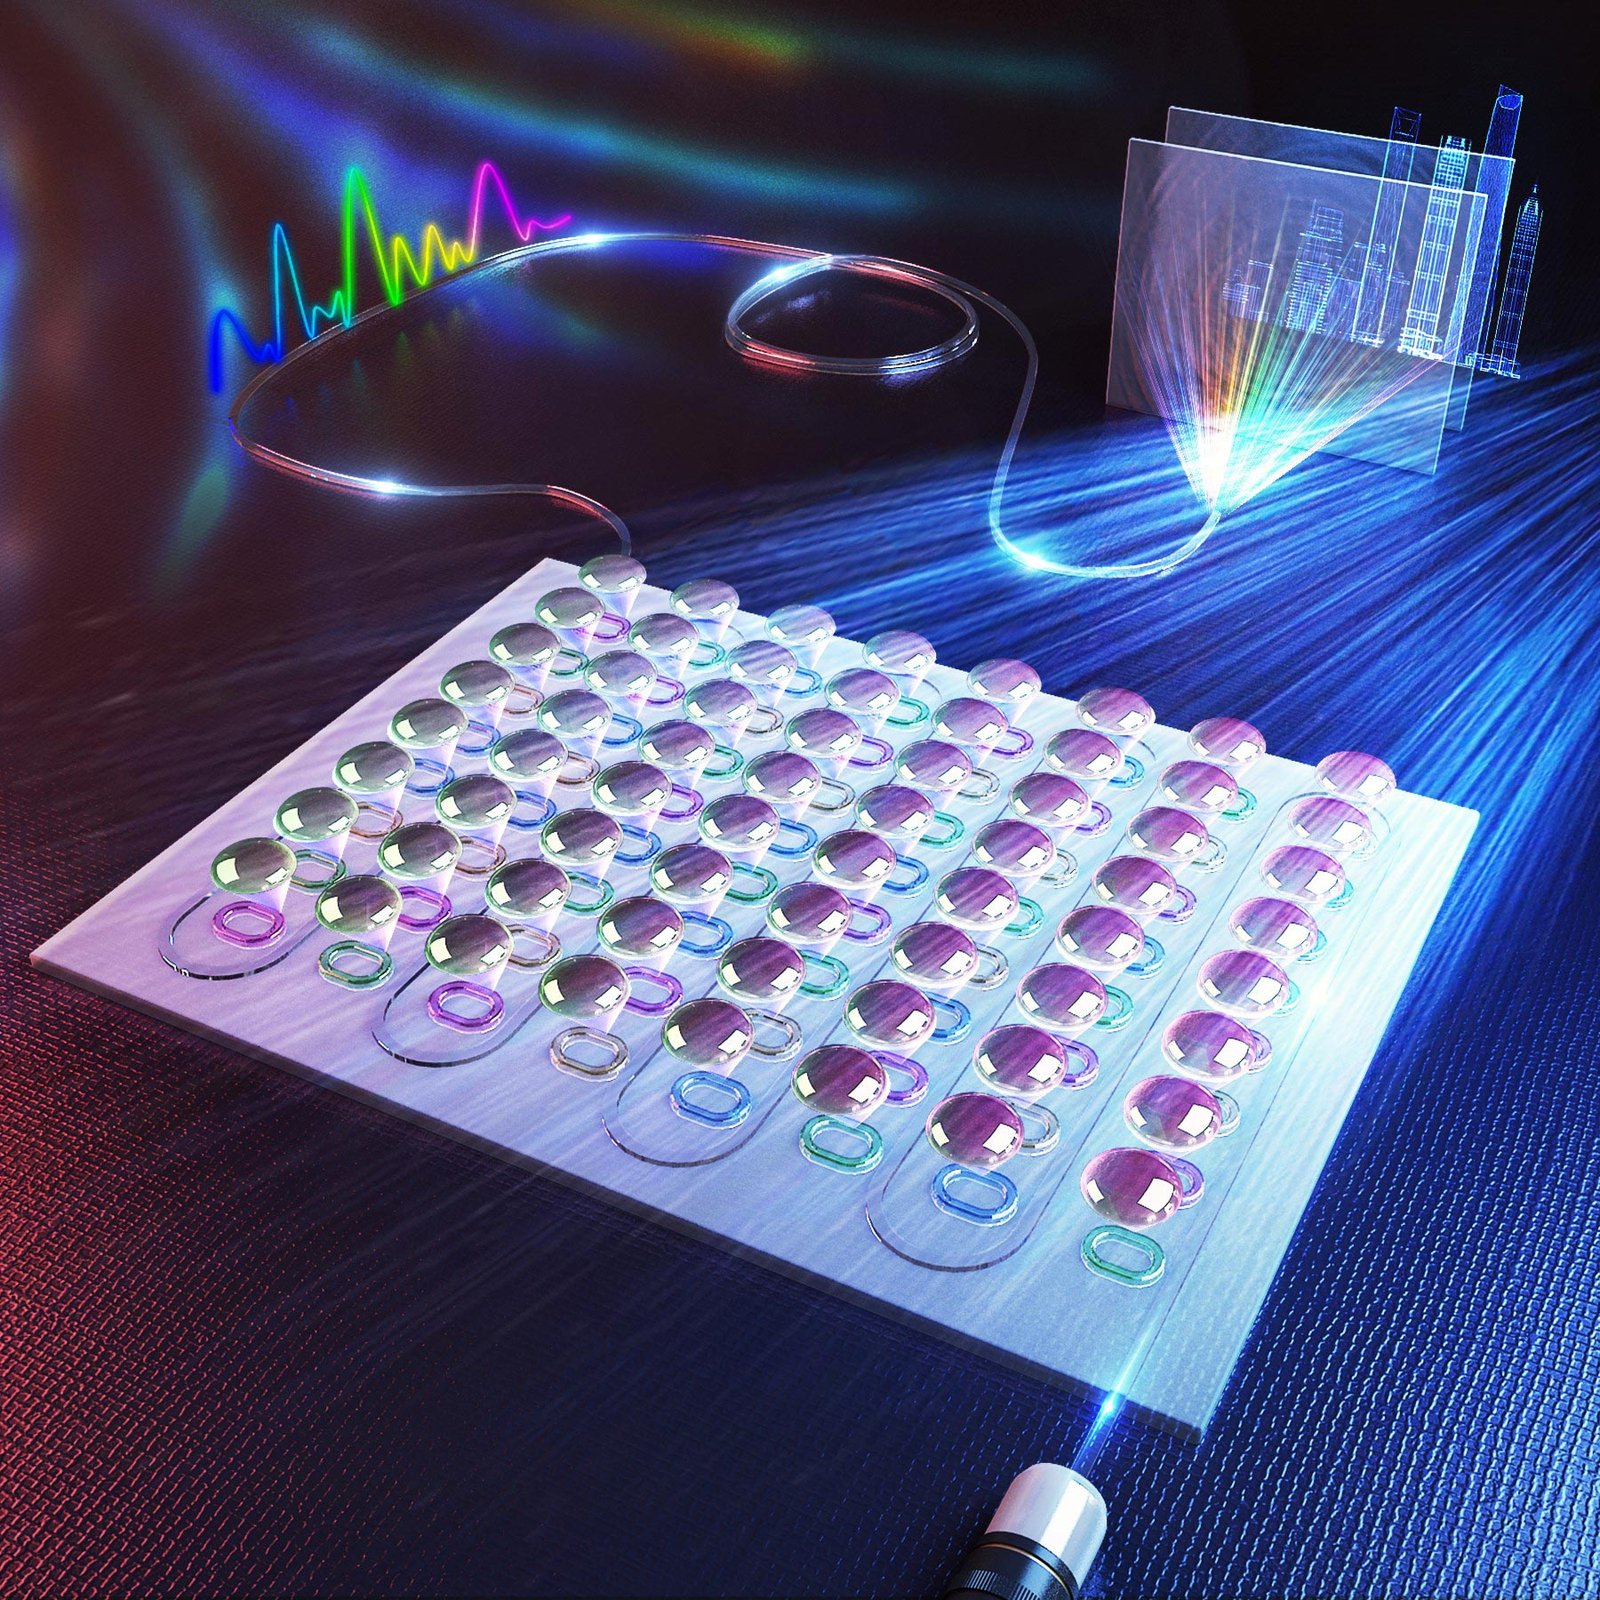 Ultrafast Photonic Chip Transforms Machine Vision and Edge Intelligence